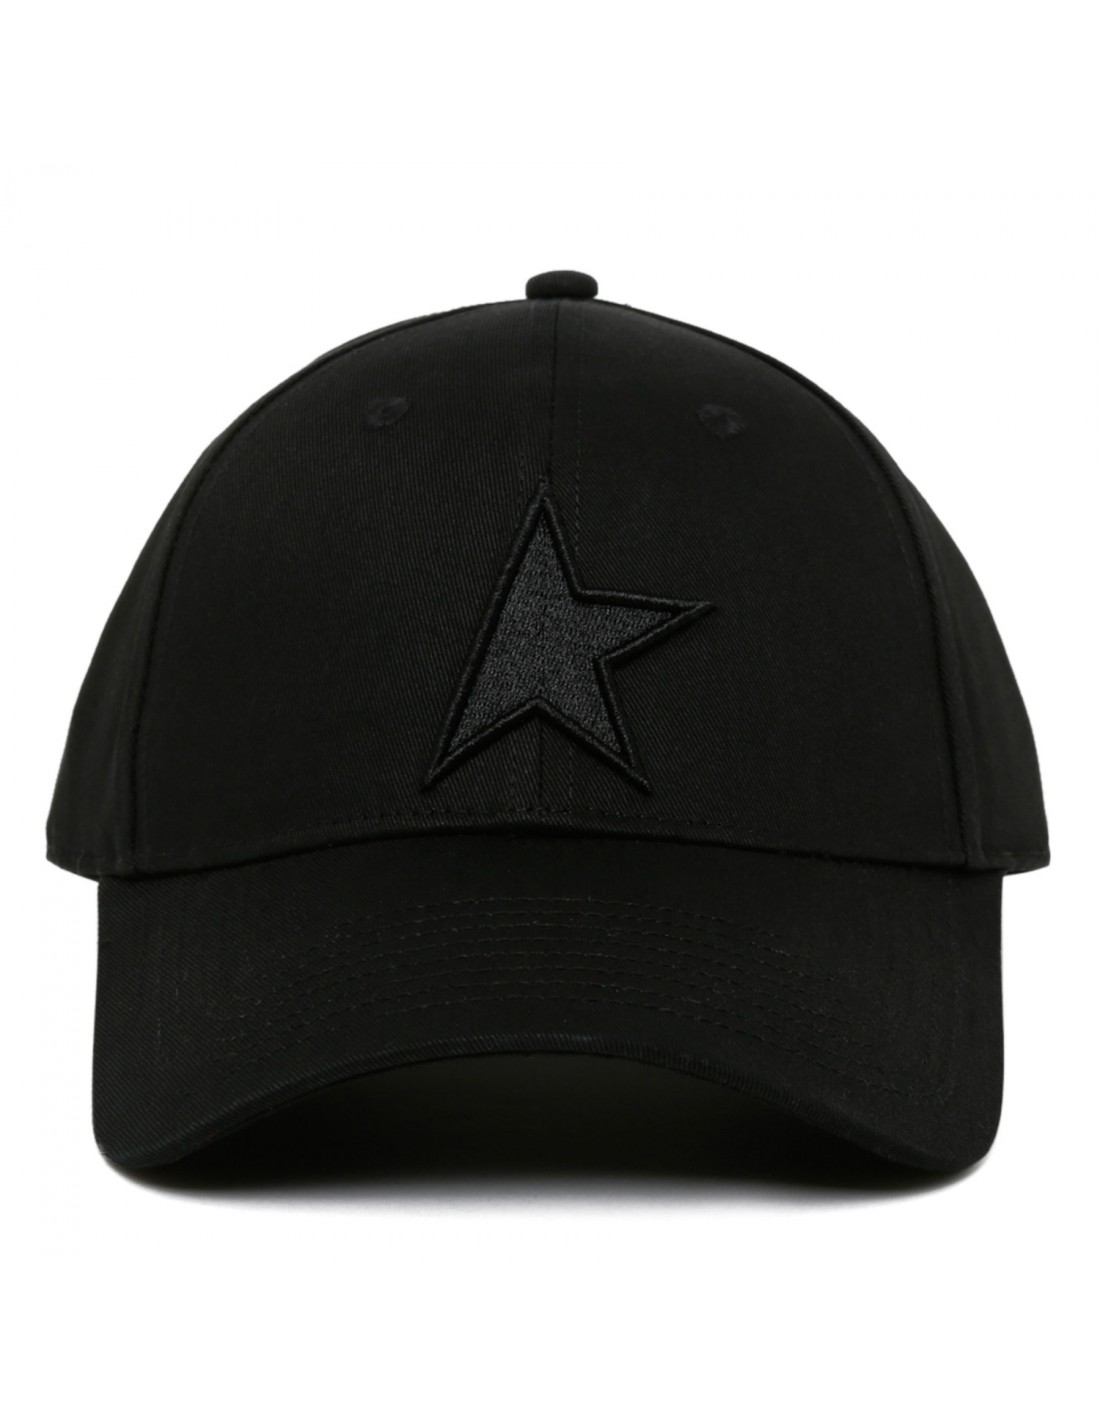 Star logo baseball cap